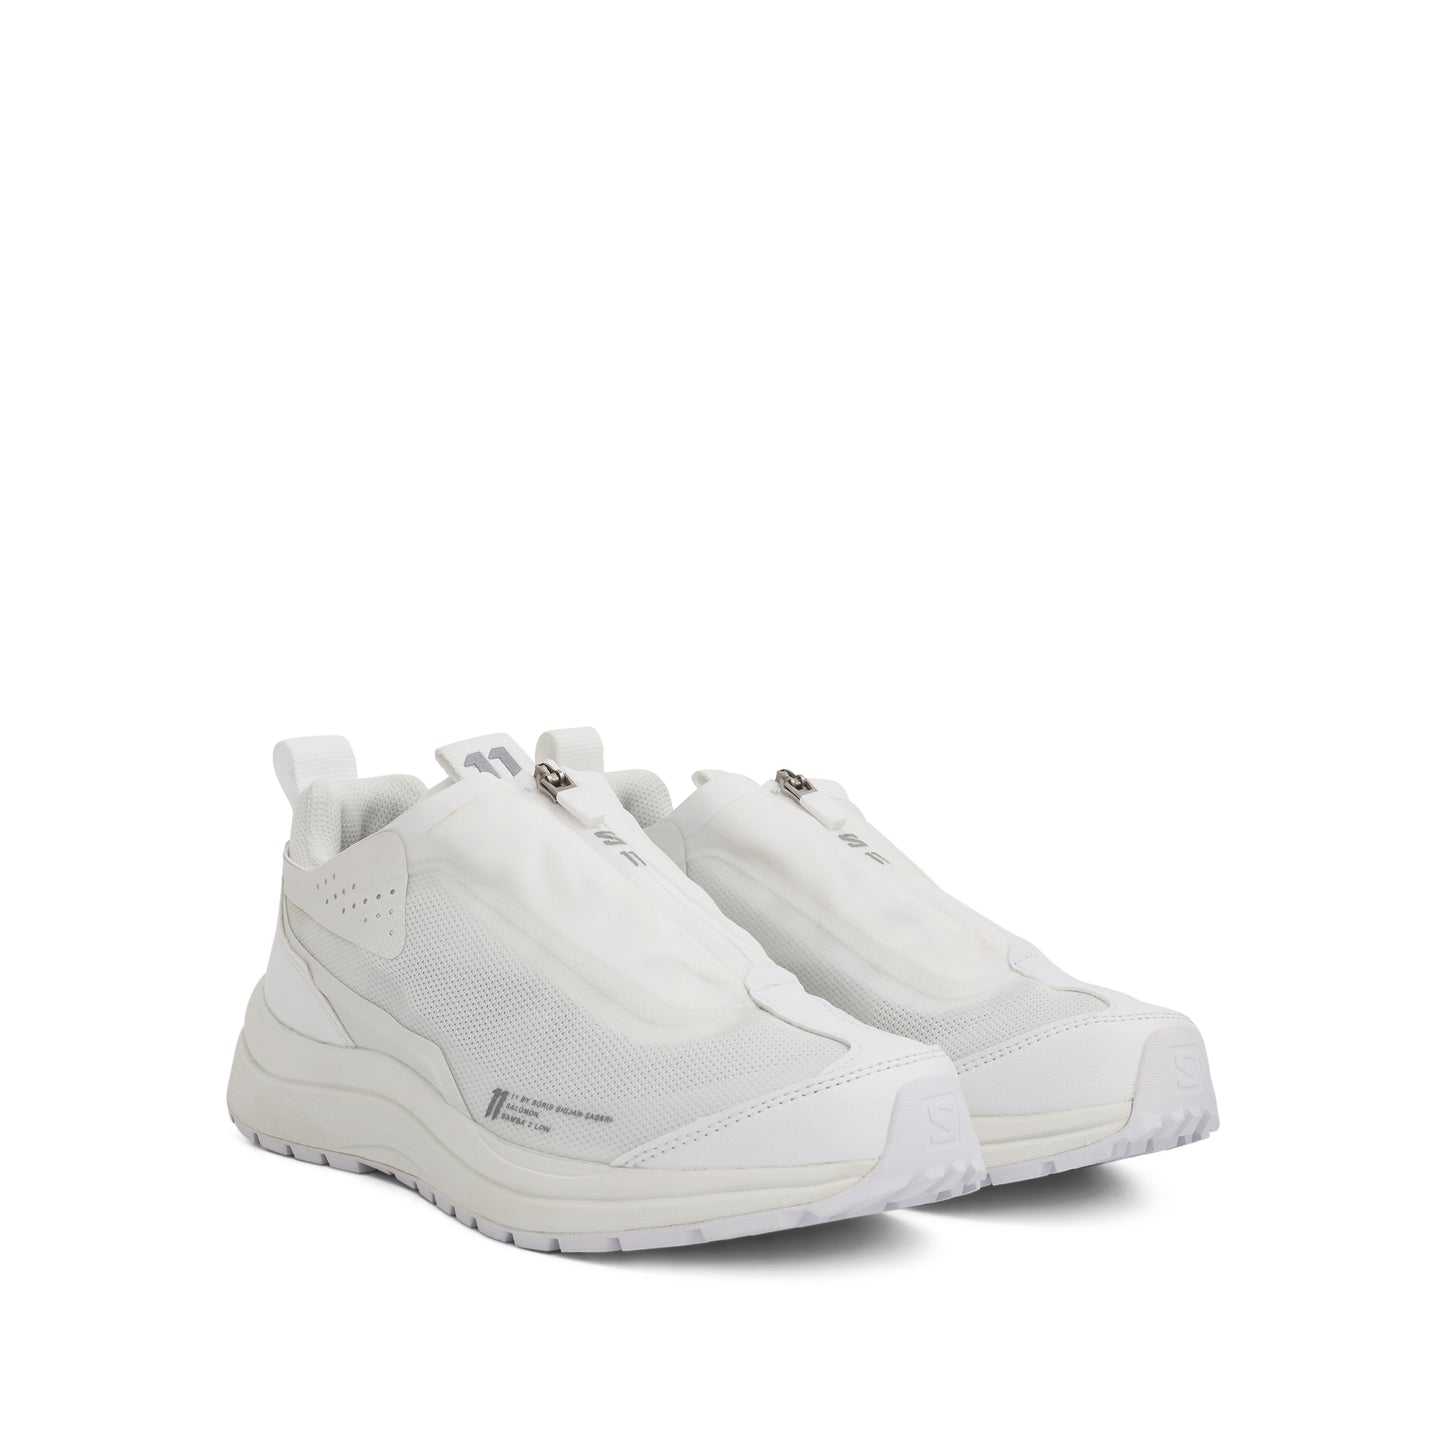 11 BY BBS x Salomon Bamba 2 Sneaker in White